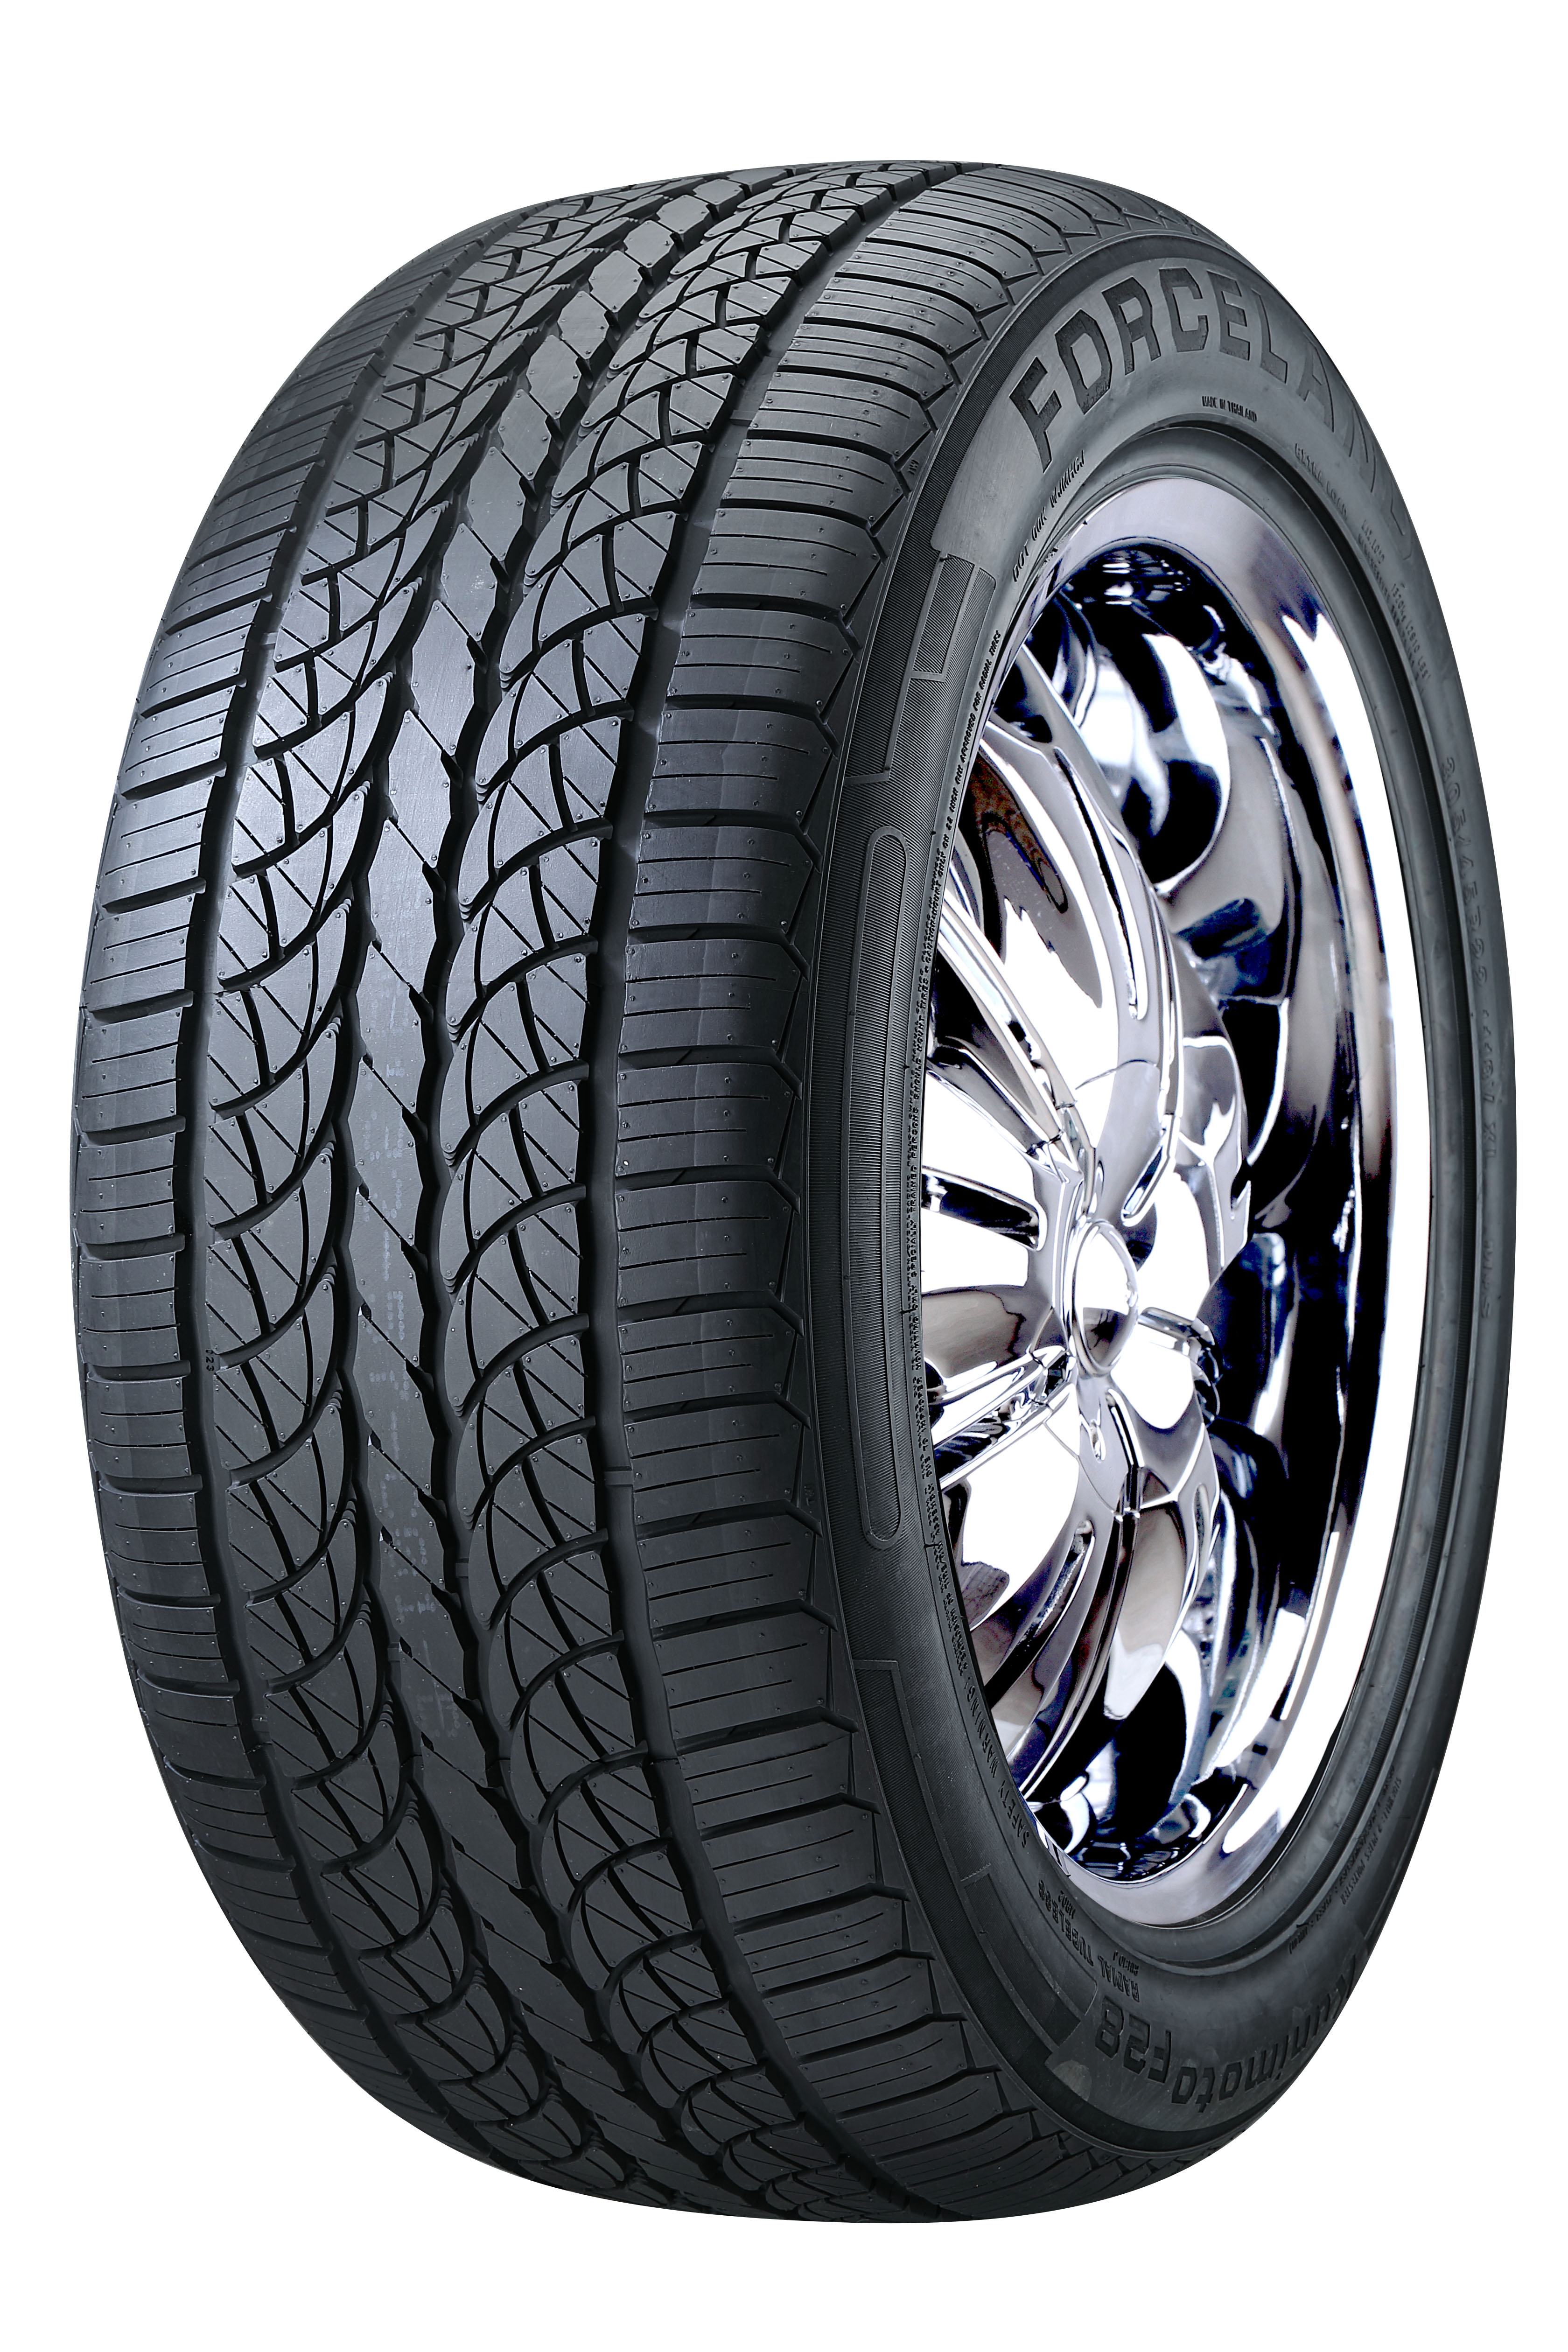 Forceland Kunimoto F28 P285/45R20 114V Bsw All-Season tire